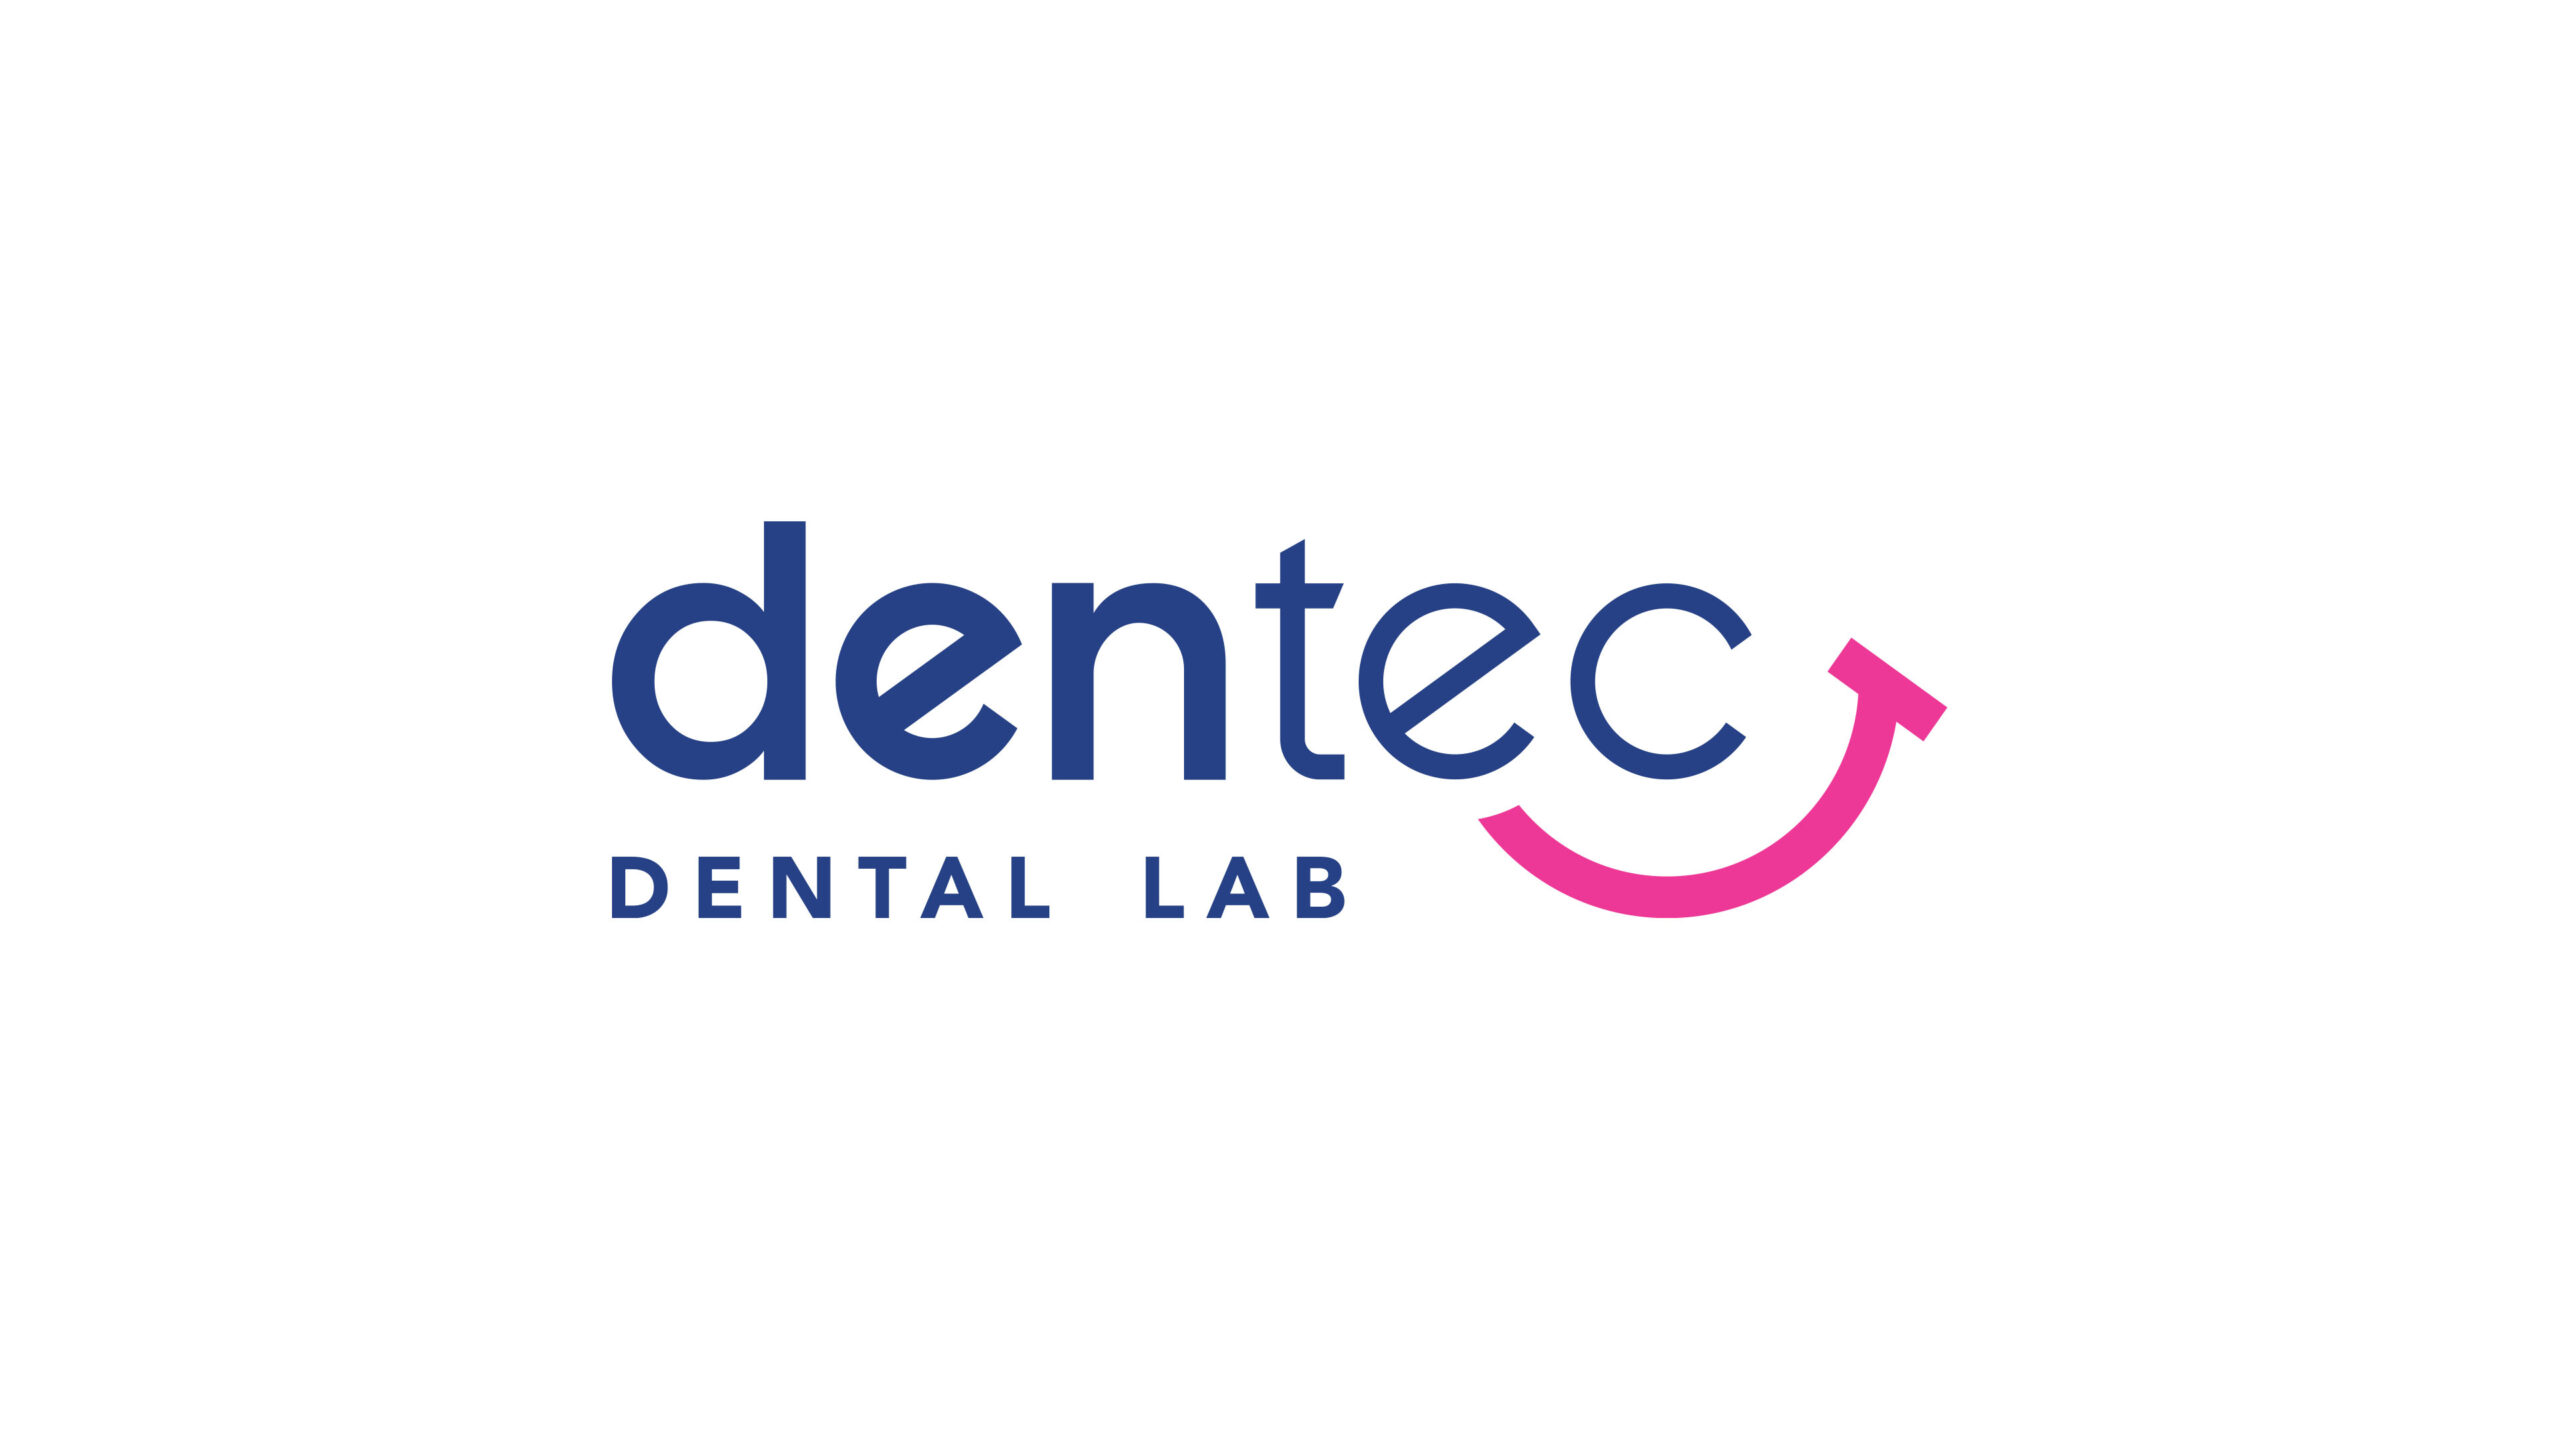 Dentec-By-STORM-Desing-Studio-01